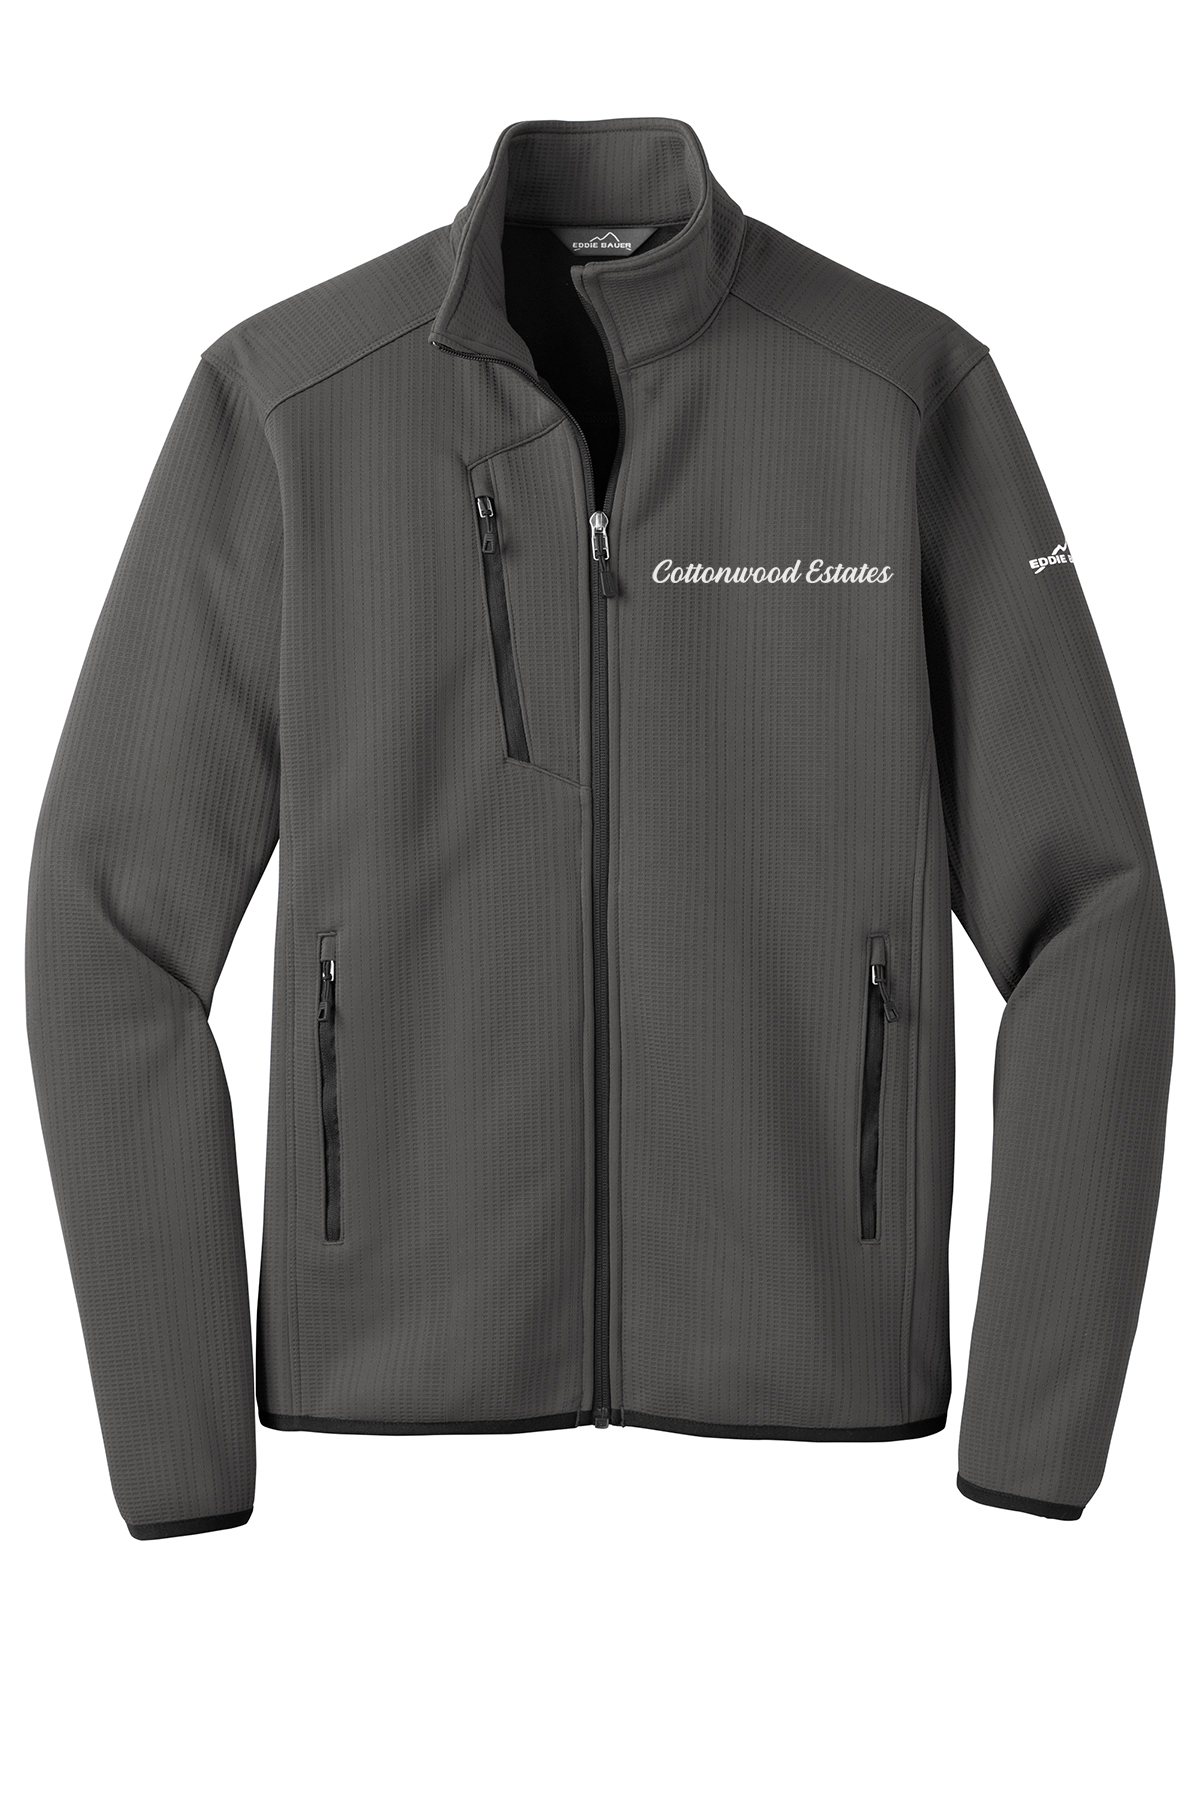 Cottonwood Estates - Mens - Eddie Bauer ® Dash Full-Zip Fleece Jacket